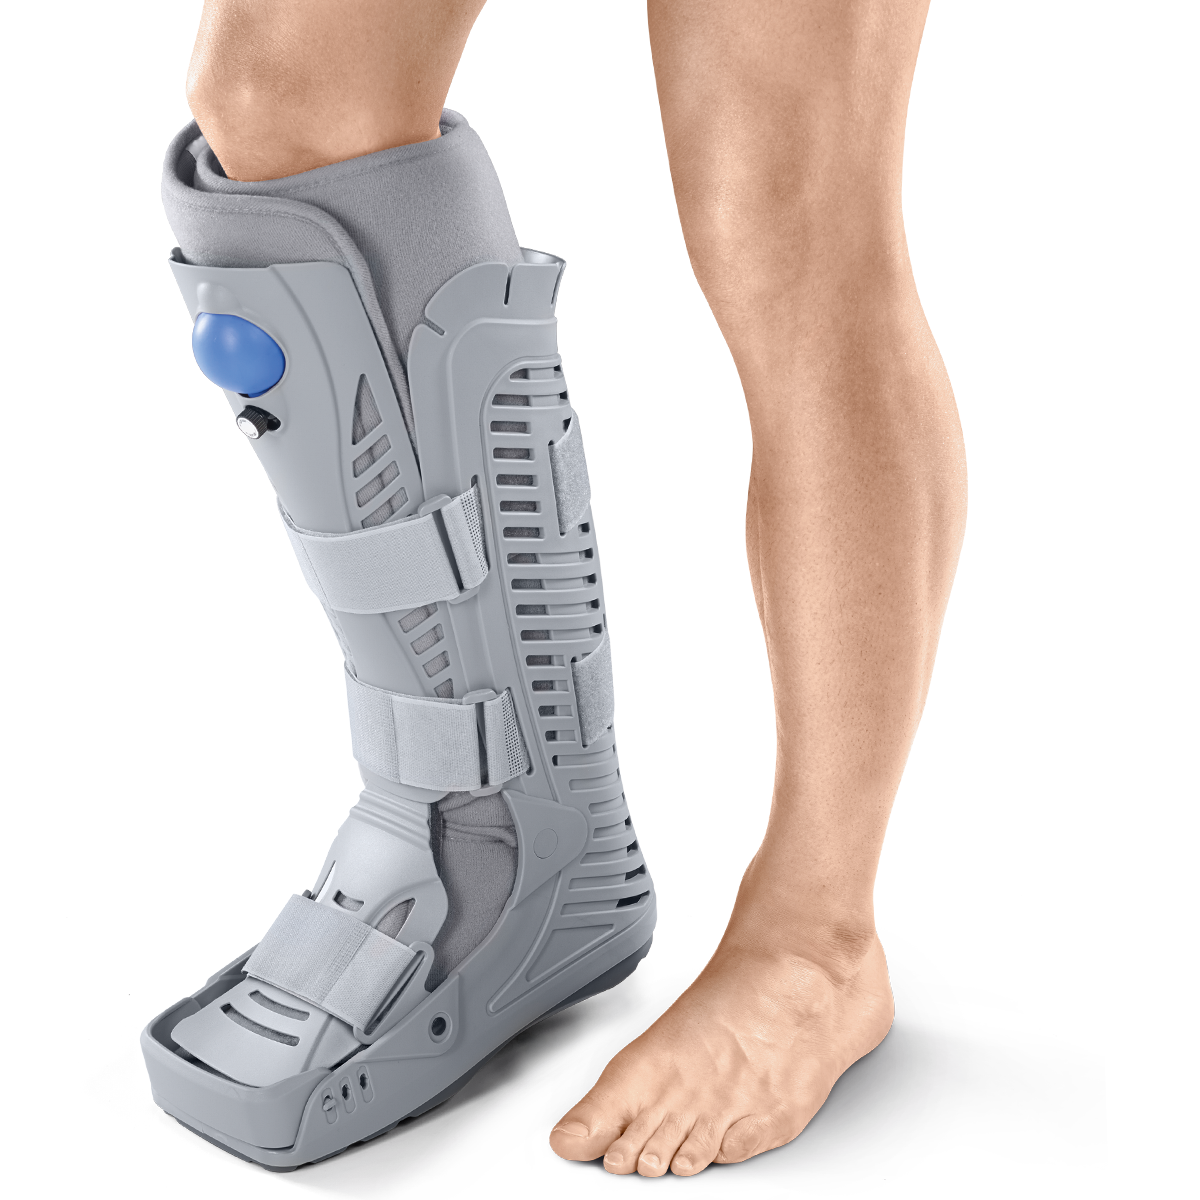 SP AIR WALKER- Lower Limb And Foot Brace, 46% OFF